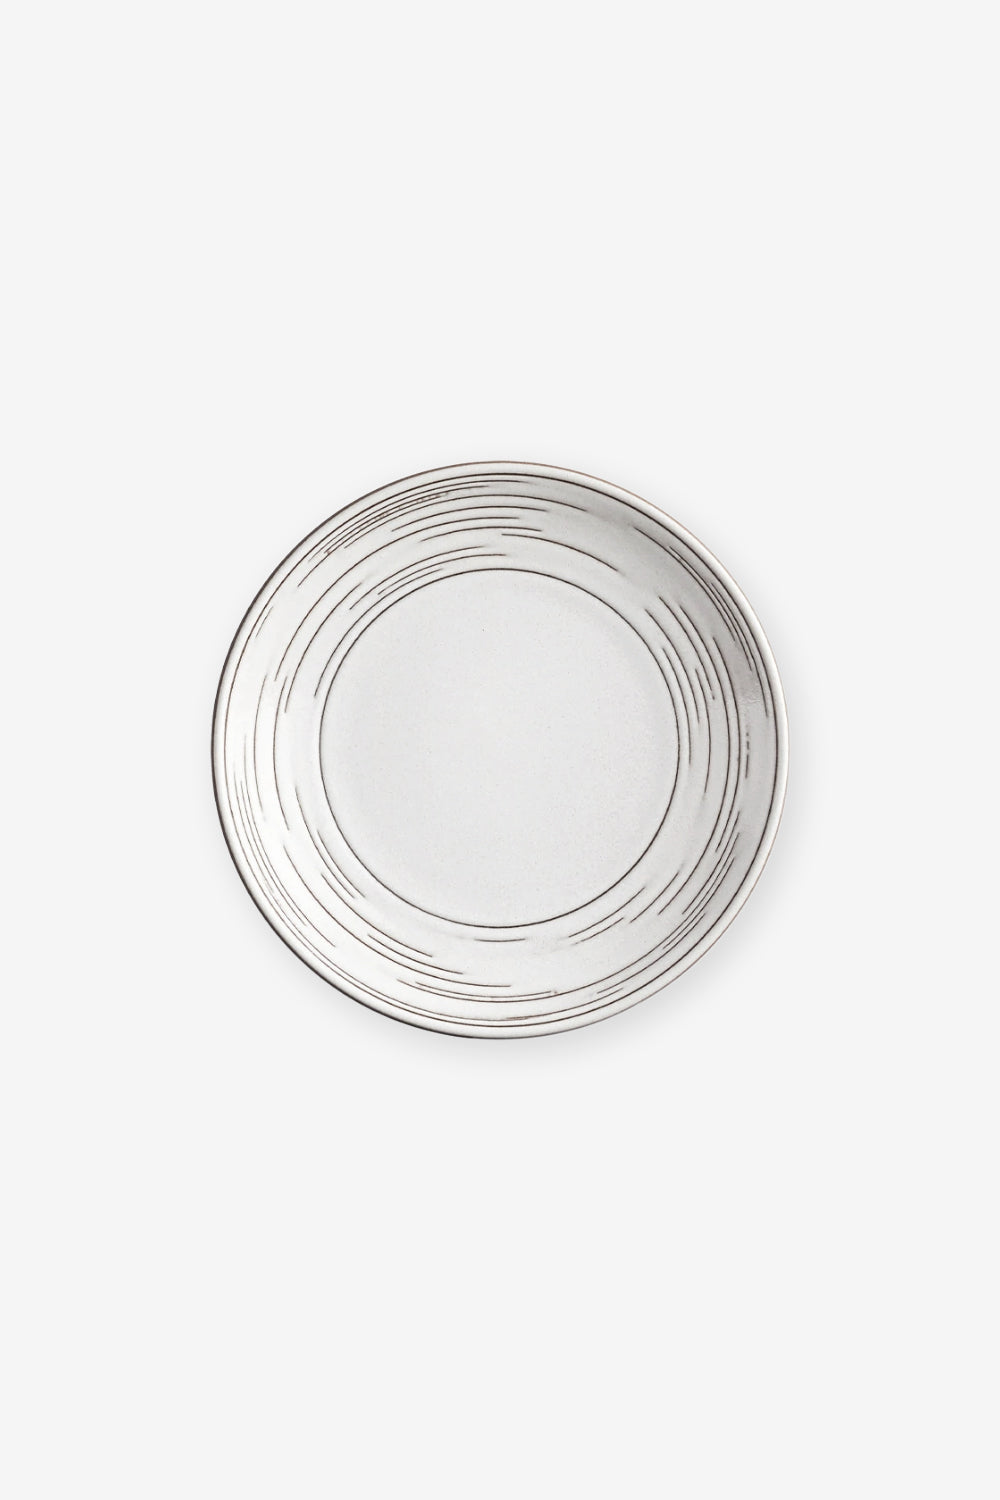 Heath Ceramic Echo Etched Plate Opaque White